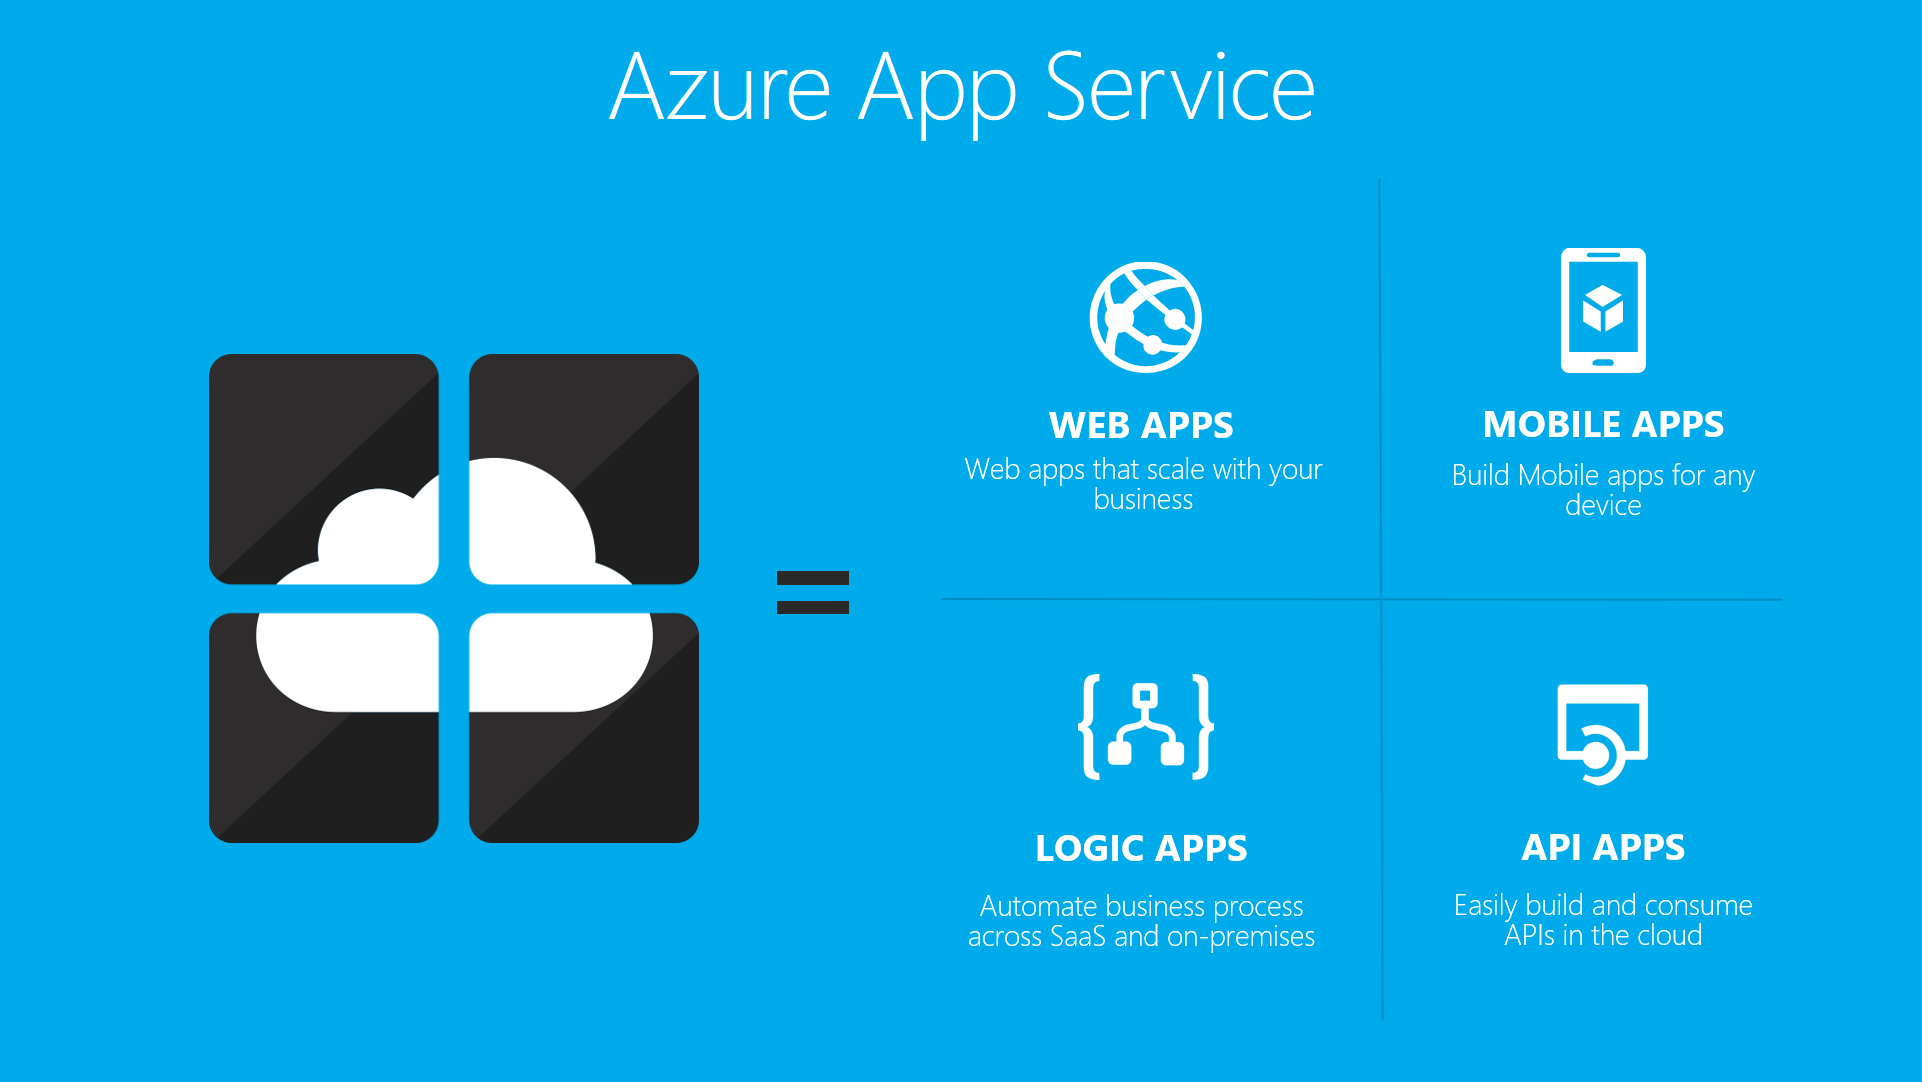 The Azure App Service [Image Credit: Microsoft]